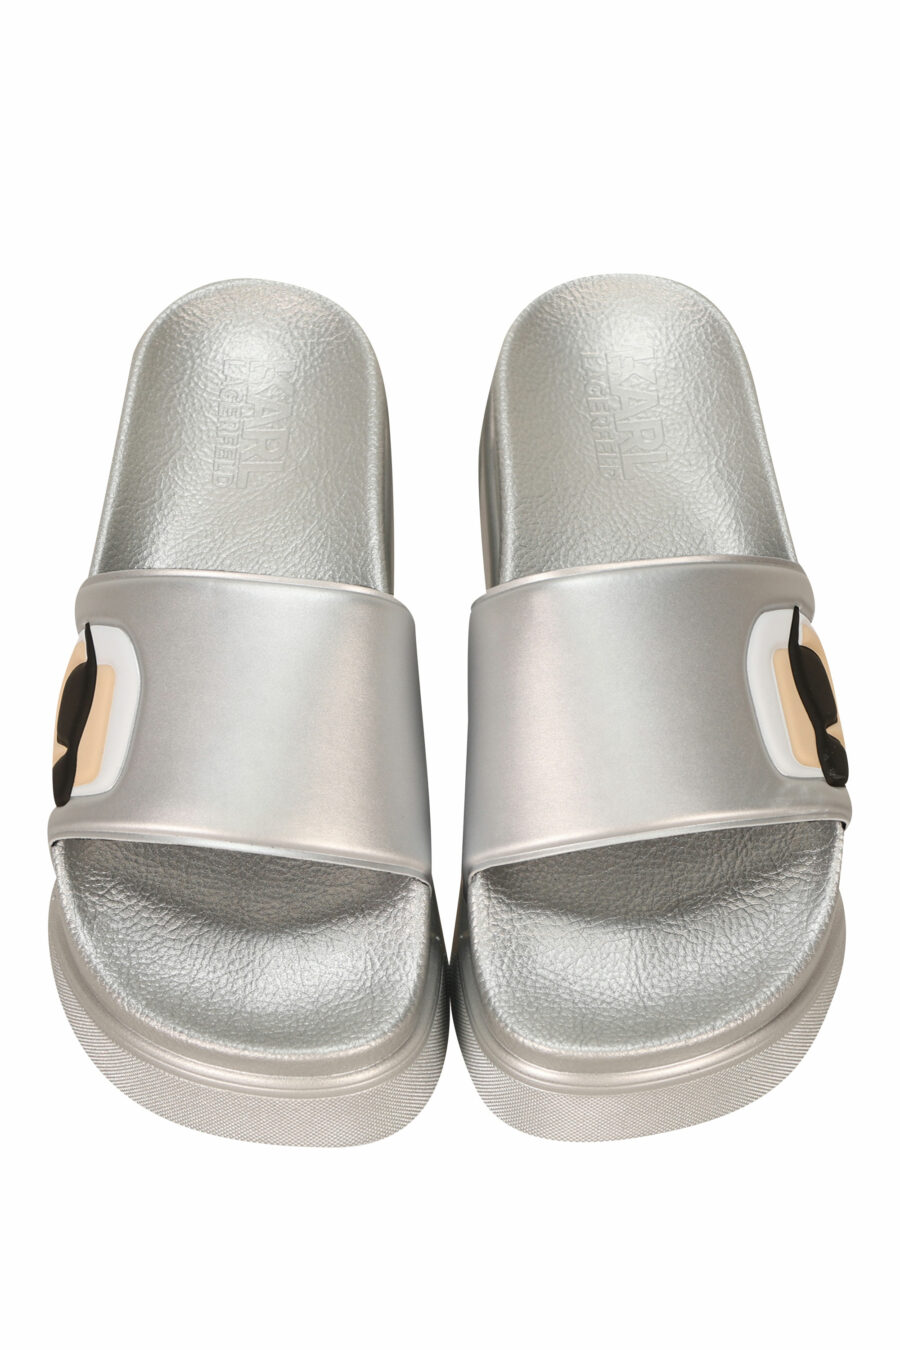 Silver platform sandals with "karl" logo - 5059529404849 4